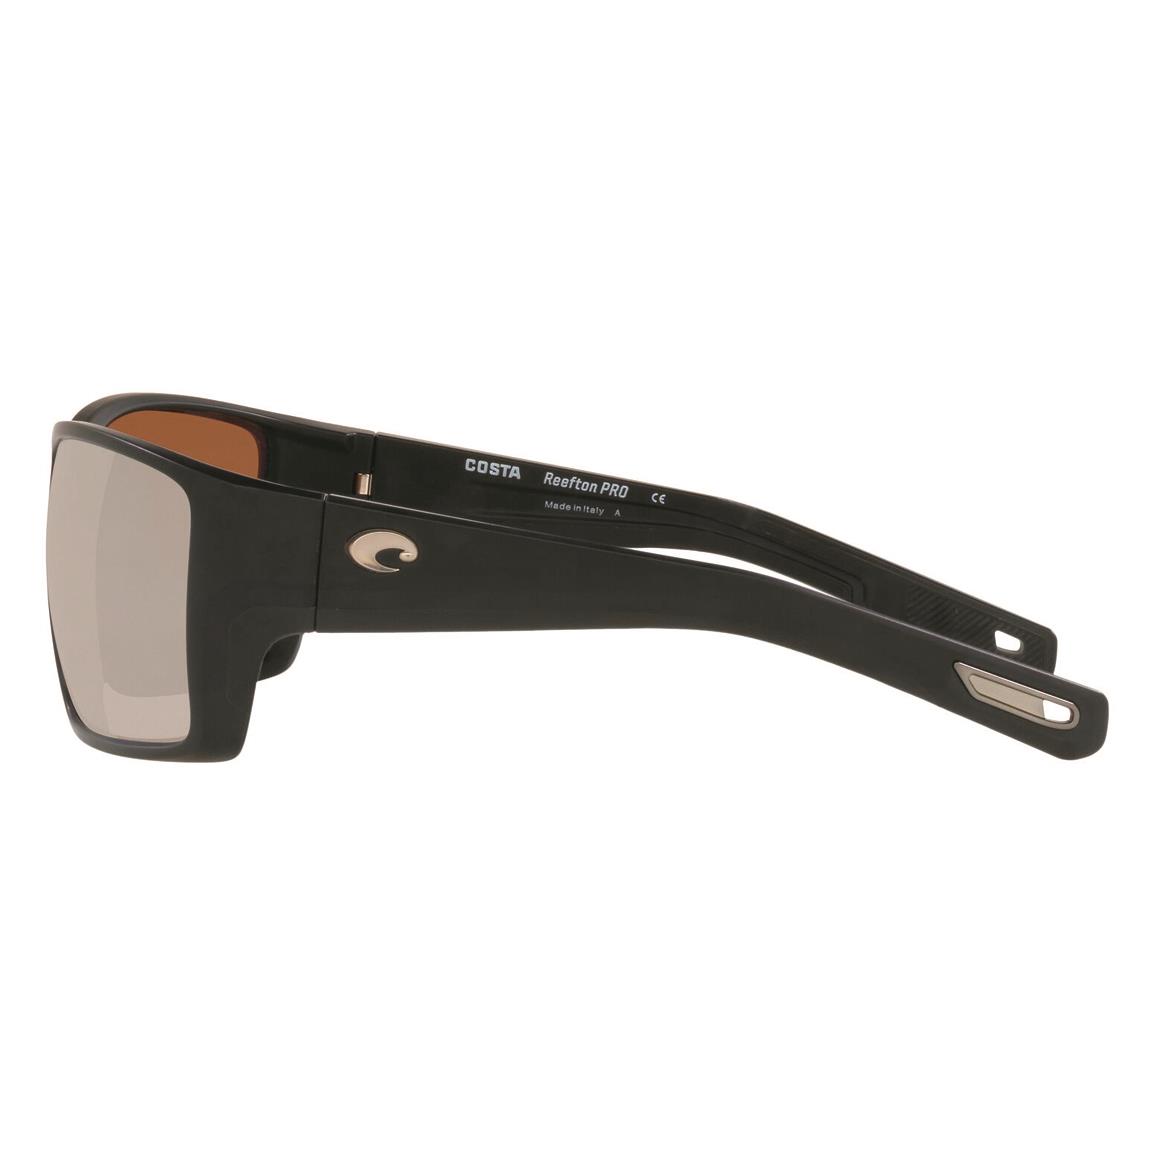 Huk Men's Challenge Polarized Sunglasses - 730832, Sunglasses & Eyewear at  Sportsman's Guide